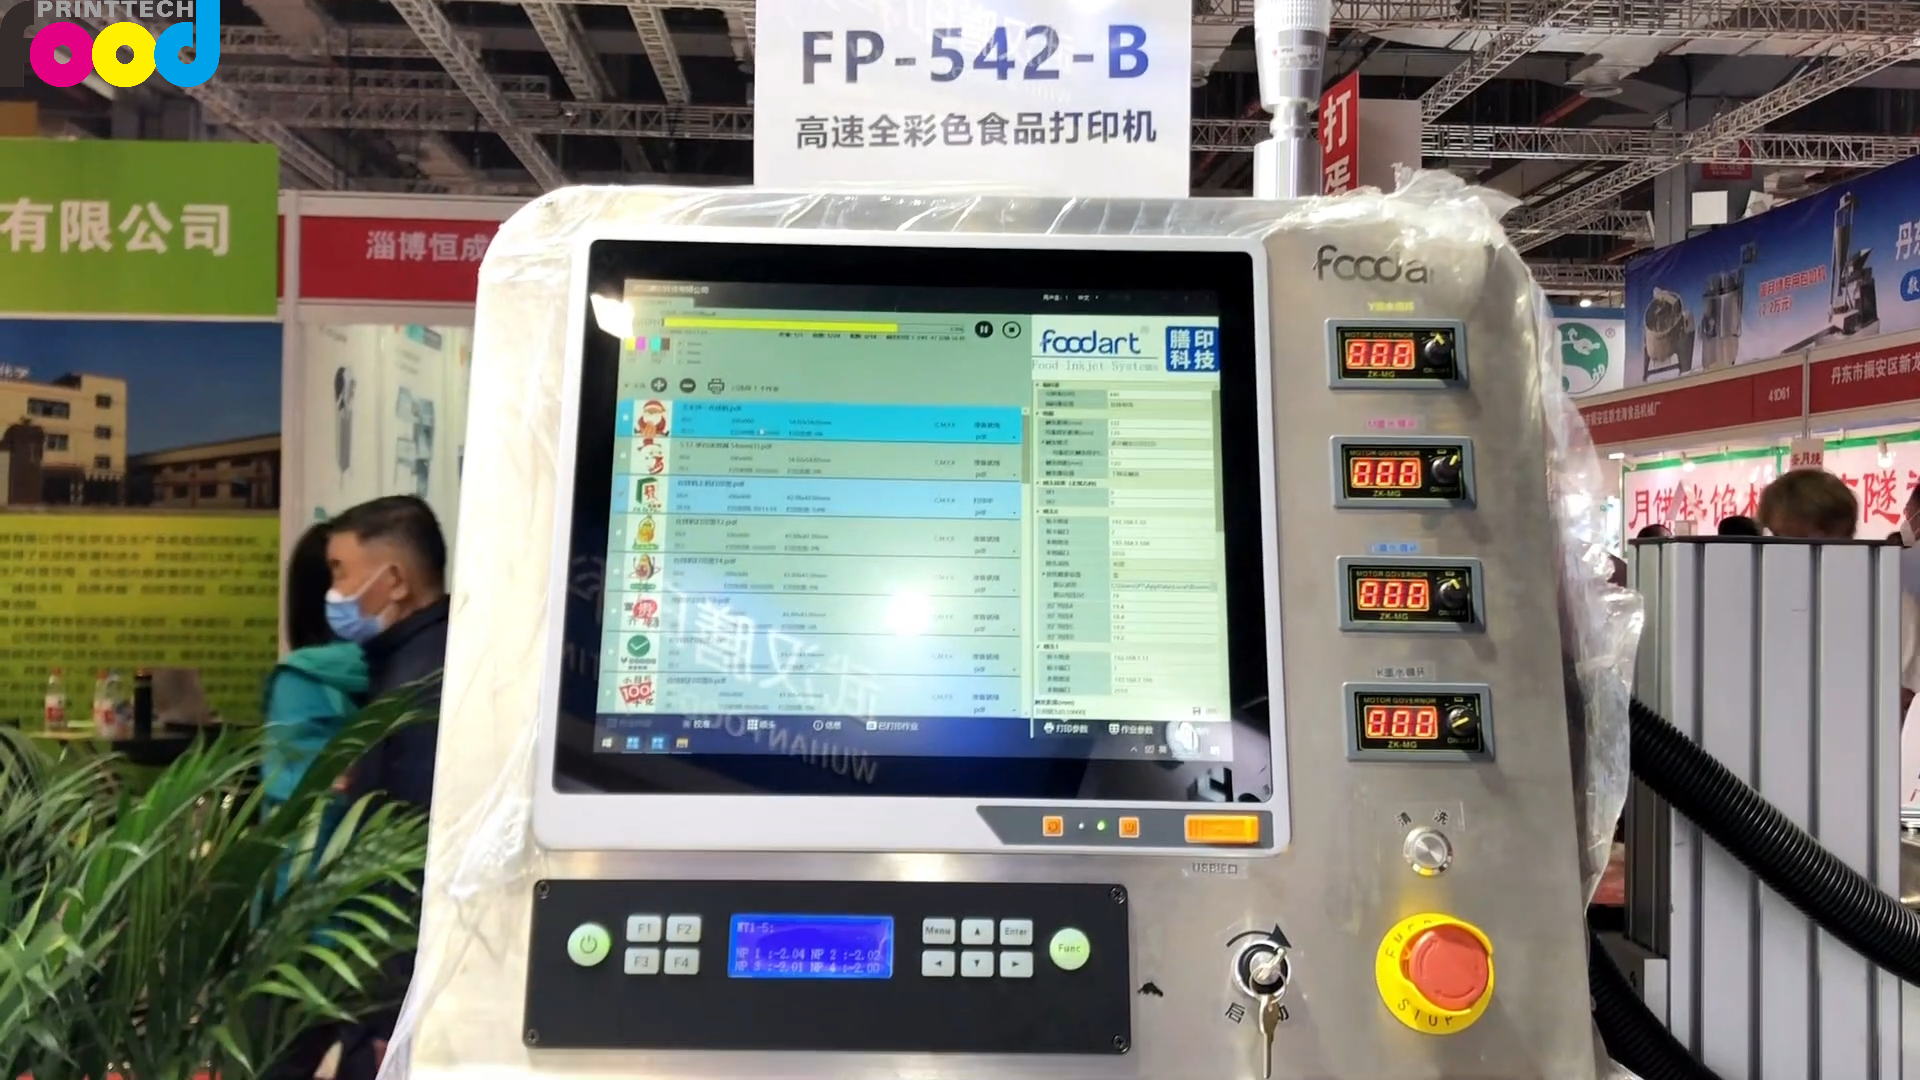 Imprimante alimentaire FP-542-B à haute vitesse